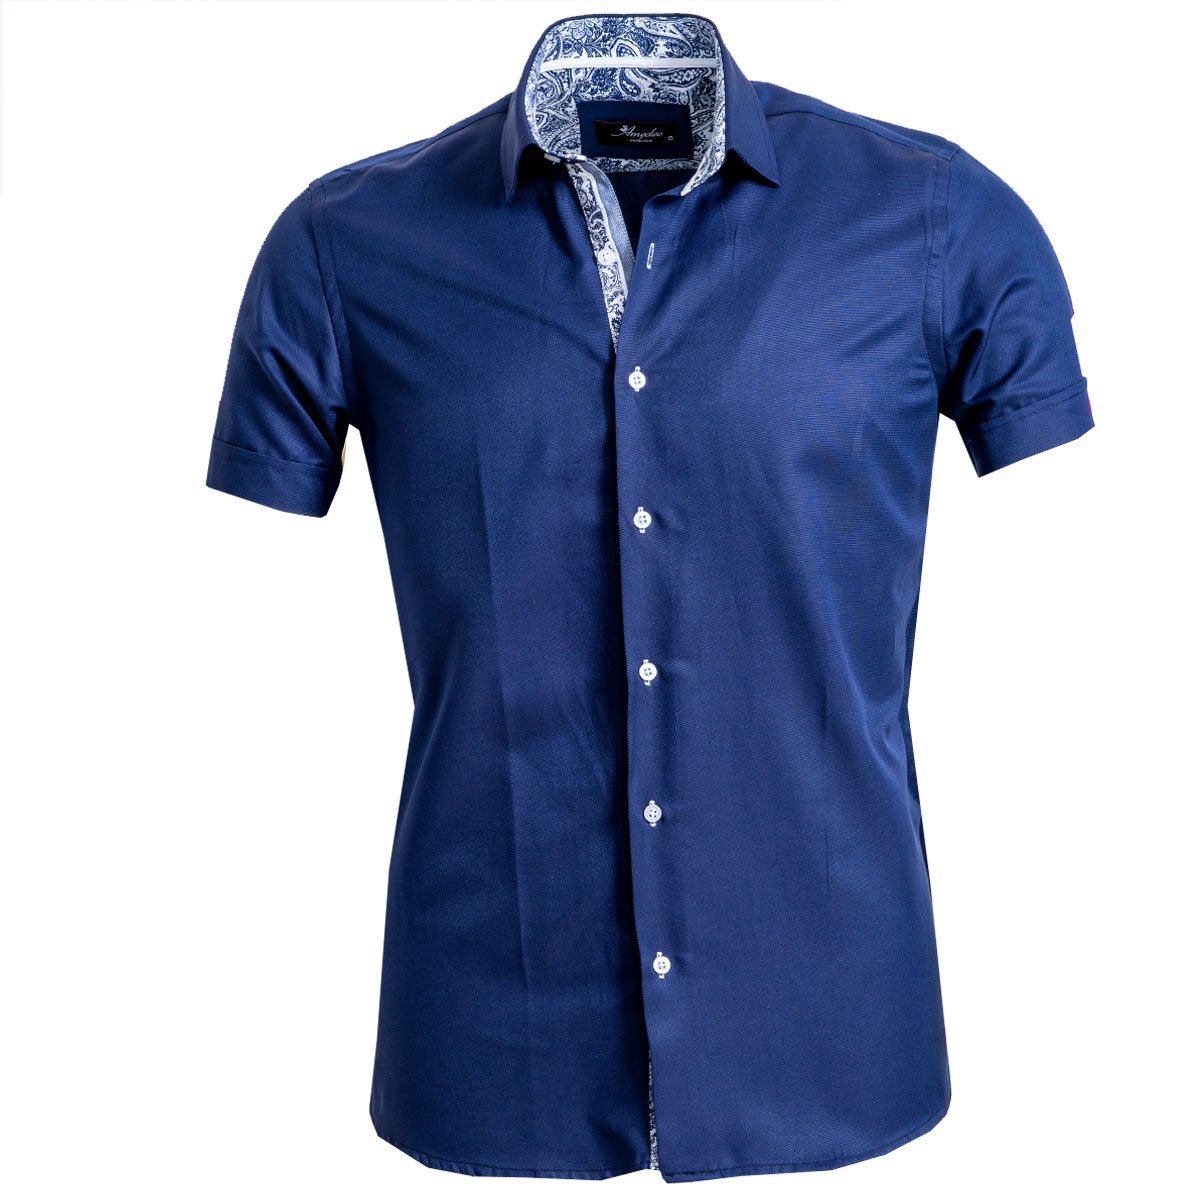 men’s dress shirts navy blue